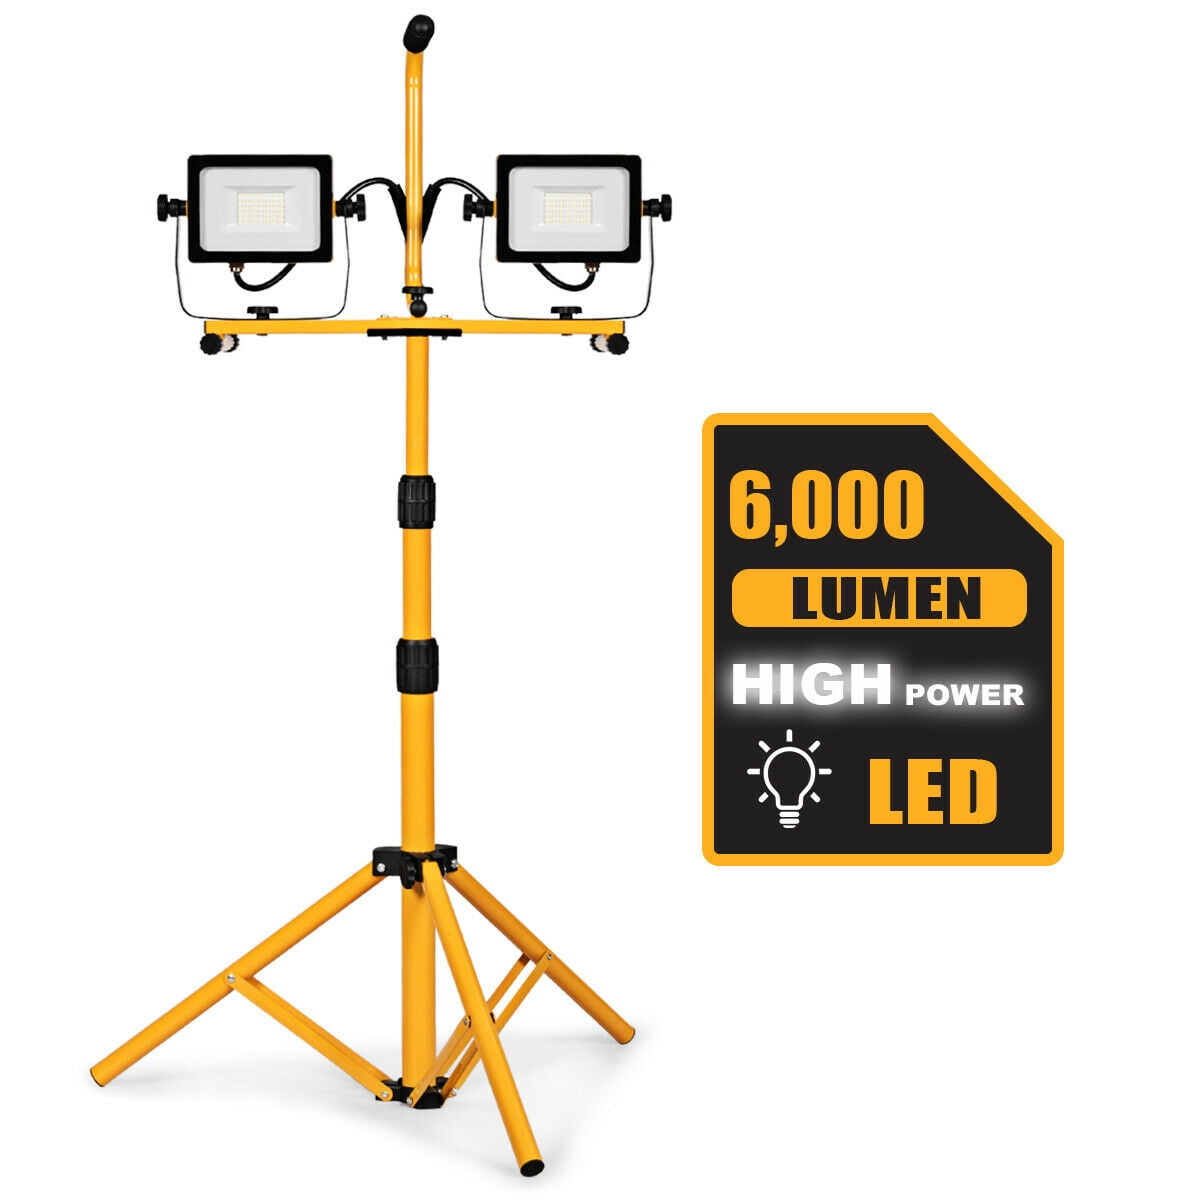 6000 Lumens Portable Led Work Light With Tripod 